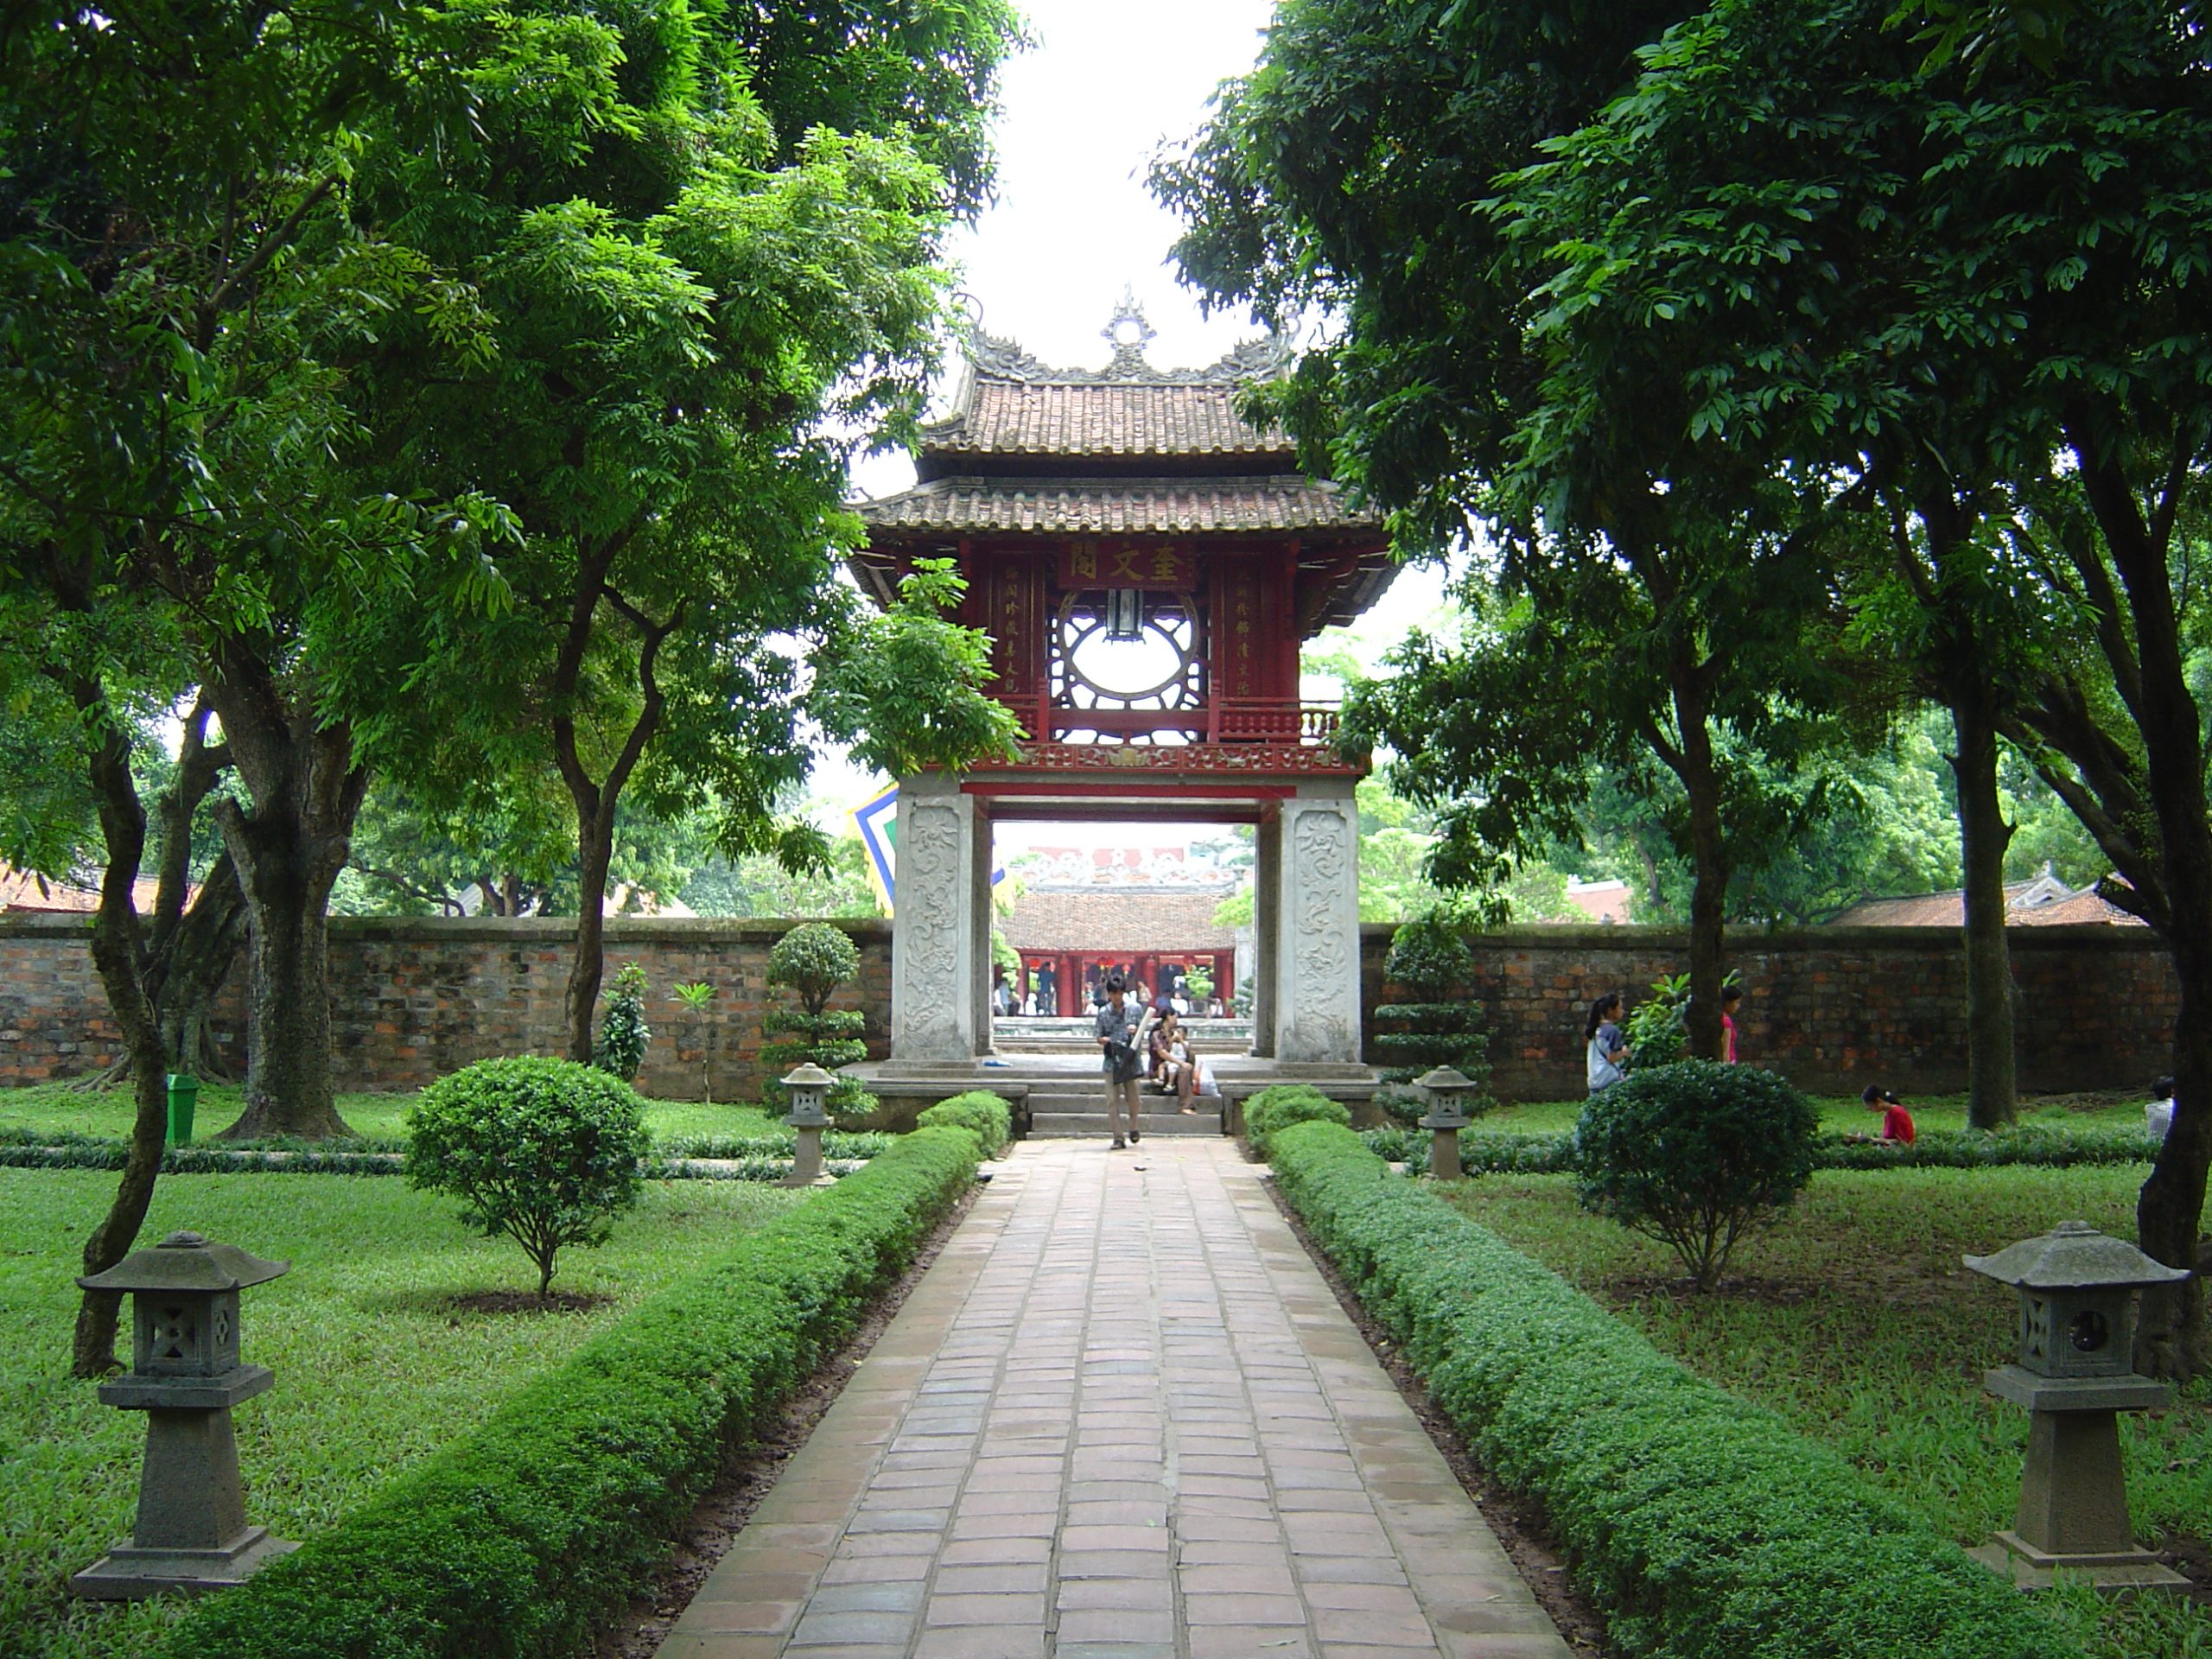 Temple of Literature - the Hanoi’s first university